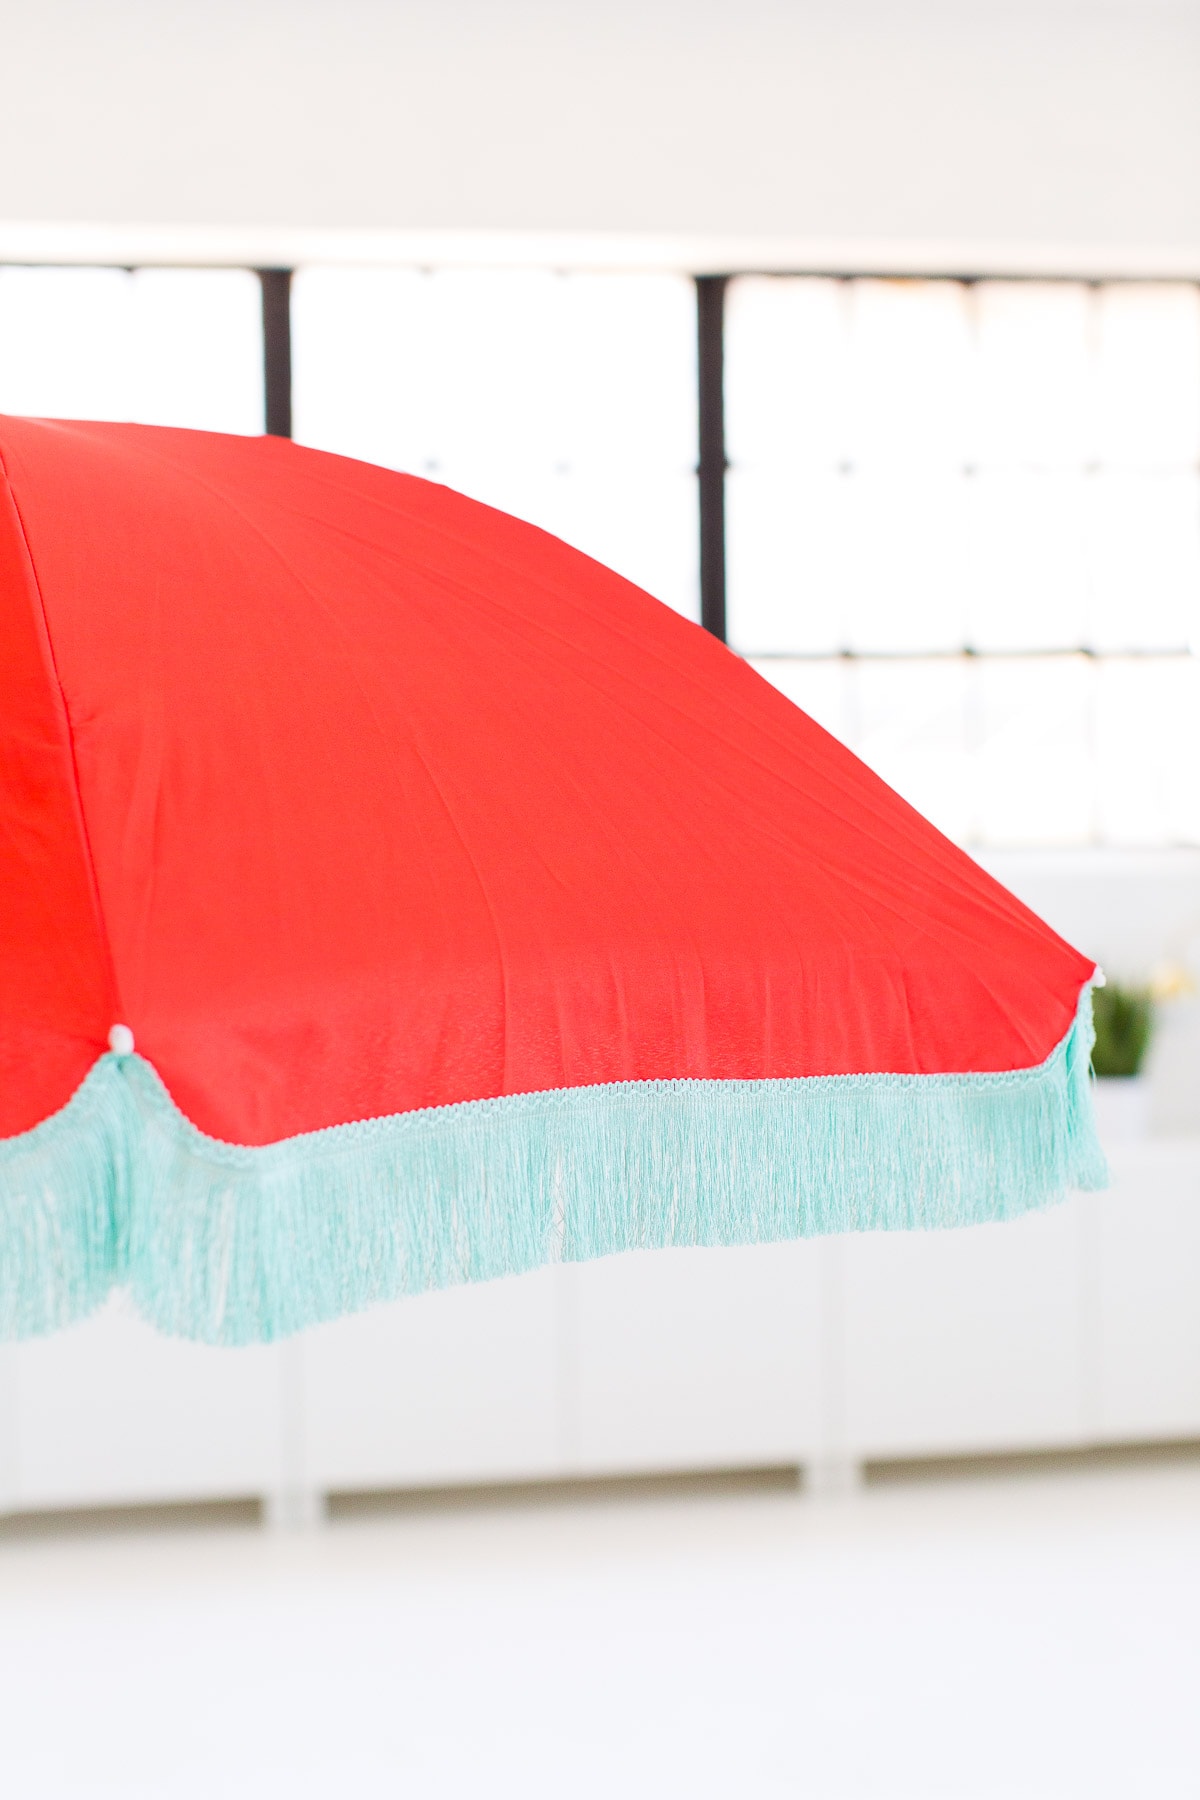 The cutest DIY retro beach umbrella for under $100 by Sugar and Cloth! - houston blogger - summer